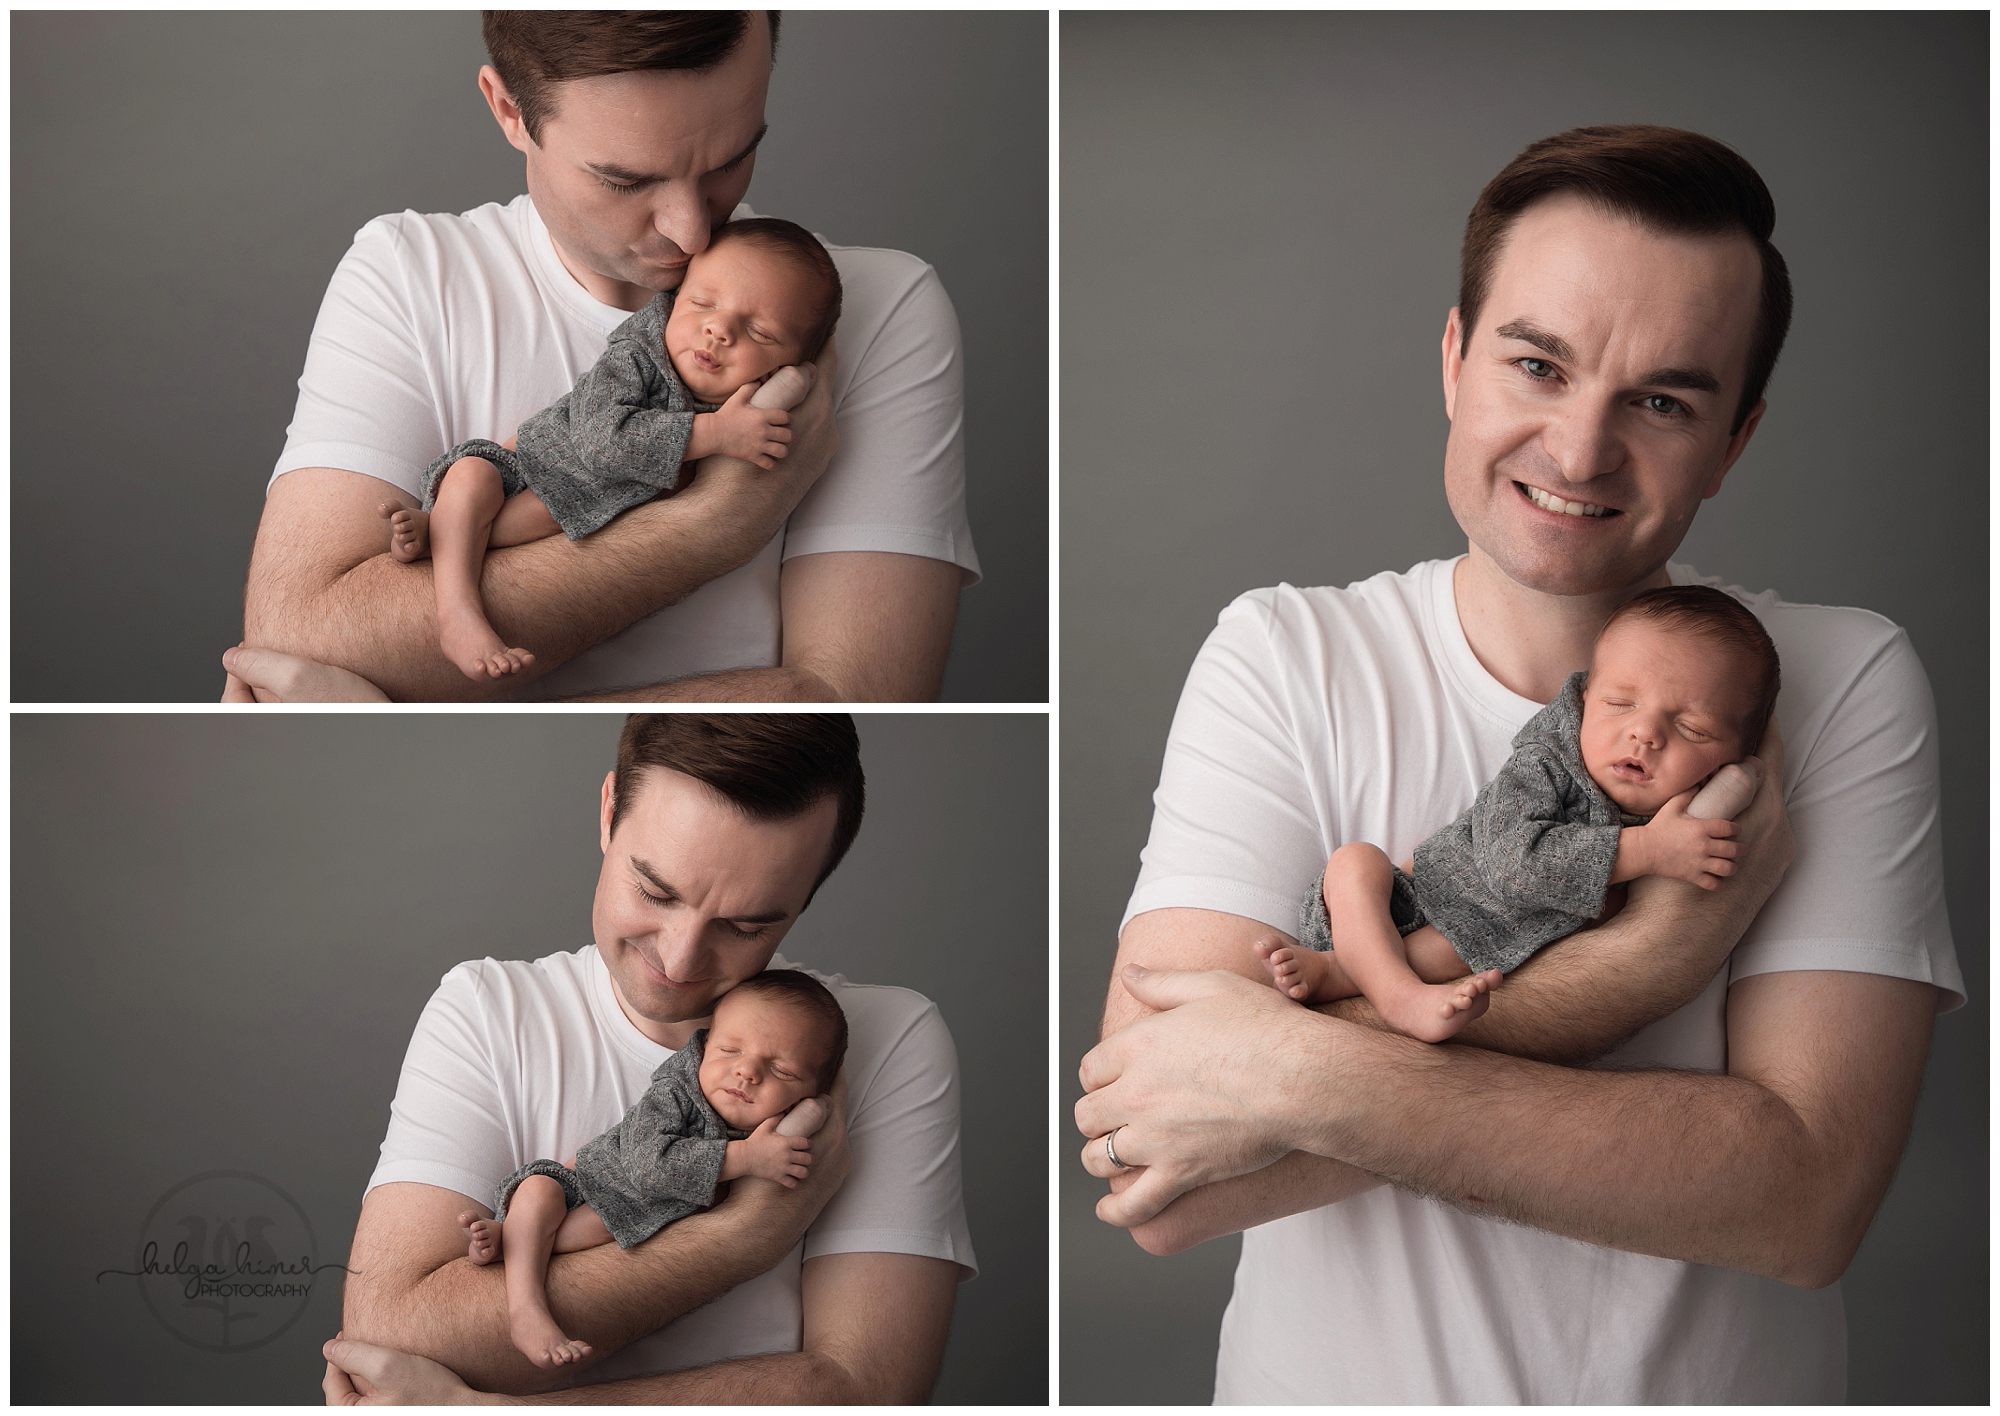 newborn-photography-ezra-helga-himer-photographer-sudbury-dad-with-baby-white-shirt